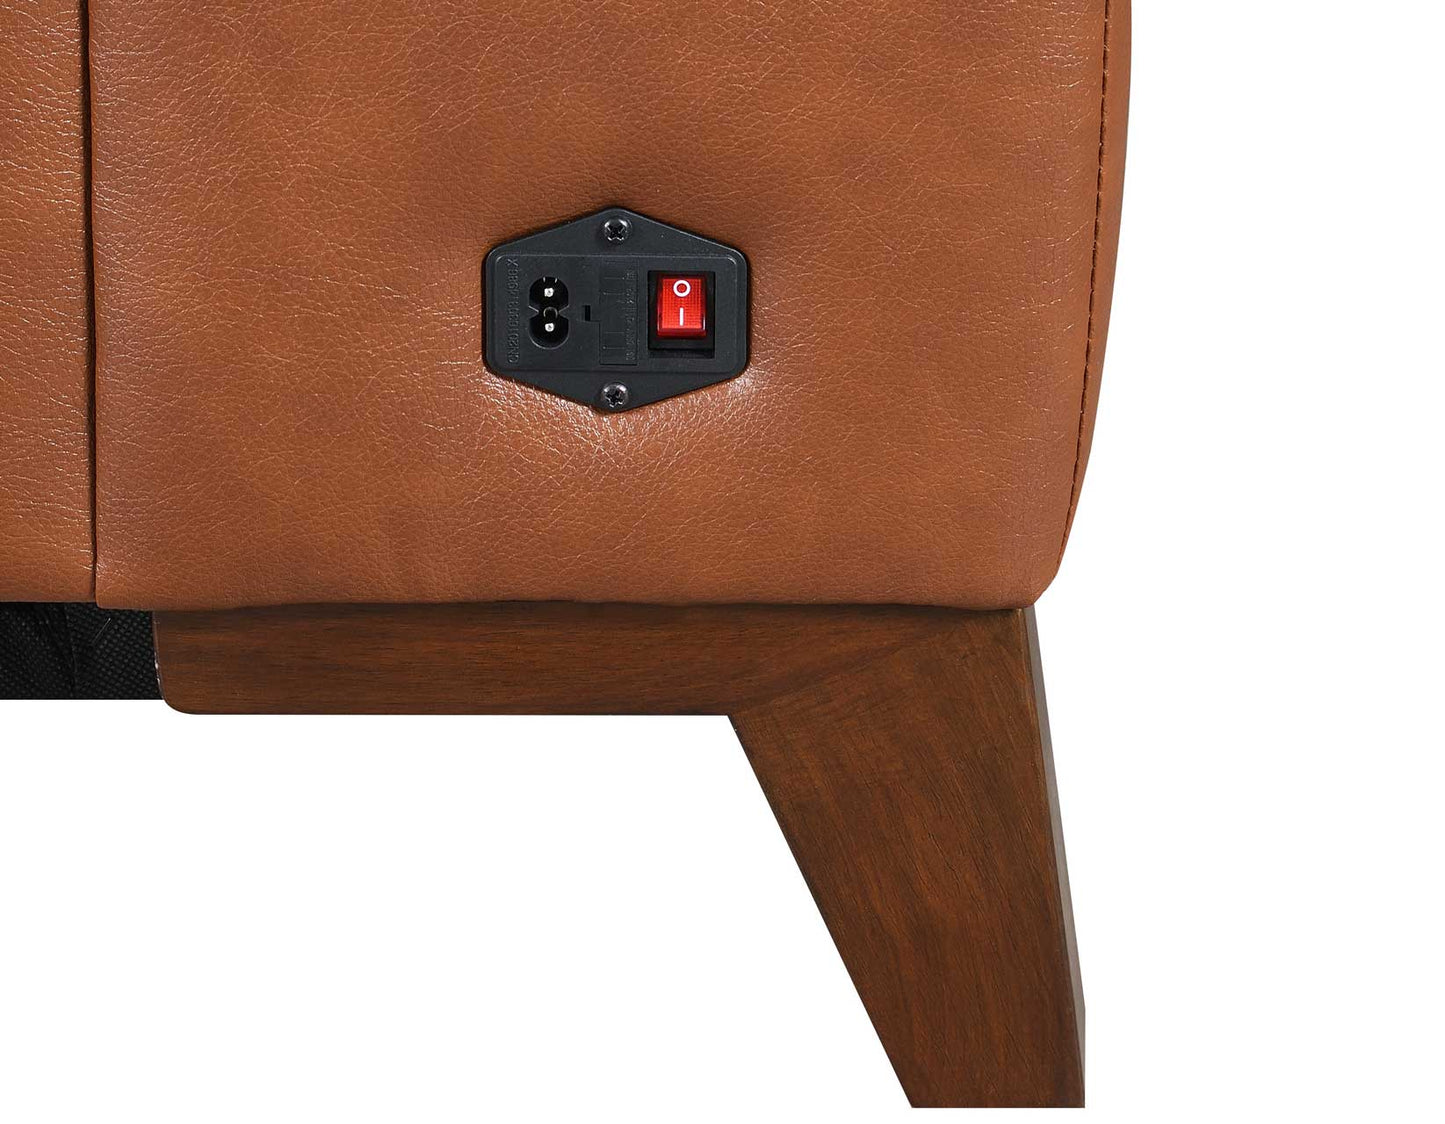 Bergamo 3- Piece Dual-Power Leather Reclining Set
(Sofa, Loveseat & Chair)